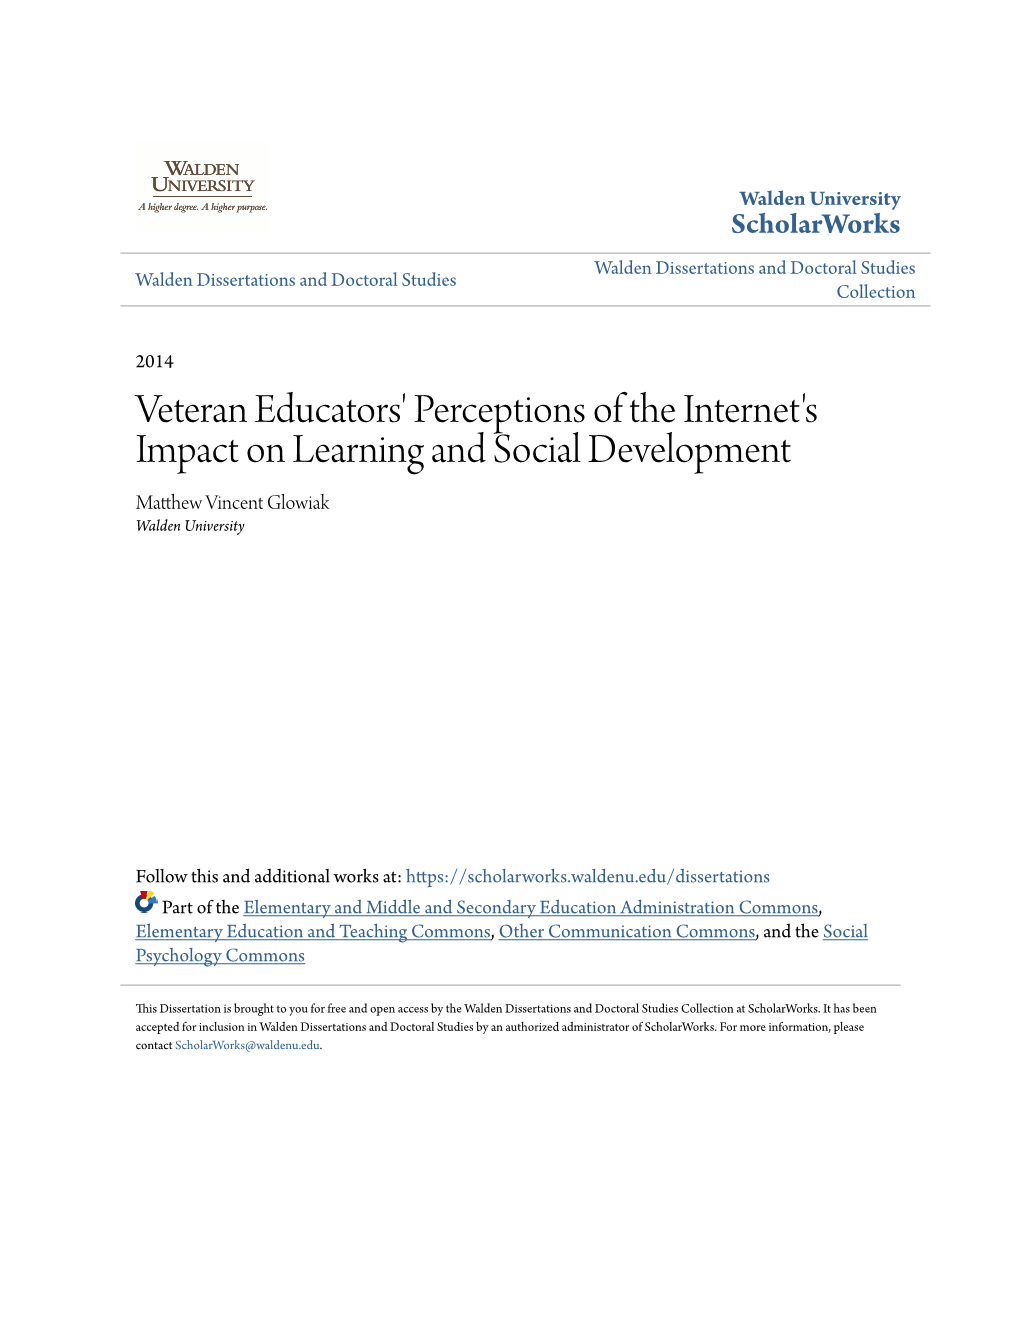 Veteran Educators' Perceptions of the Internet's Impact on Learning and Social Development Matthew Incev Nt Glowiak Walden University